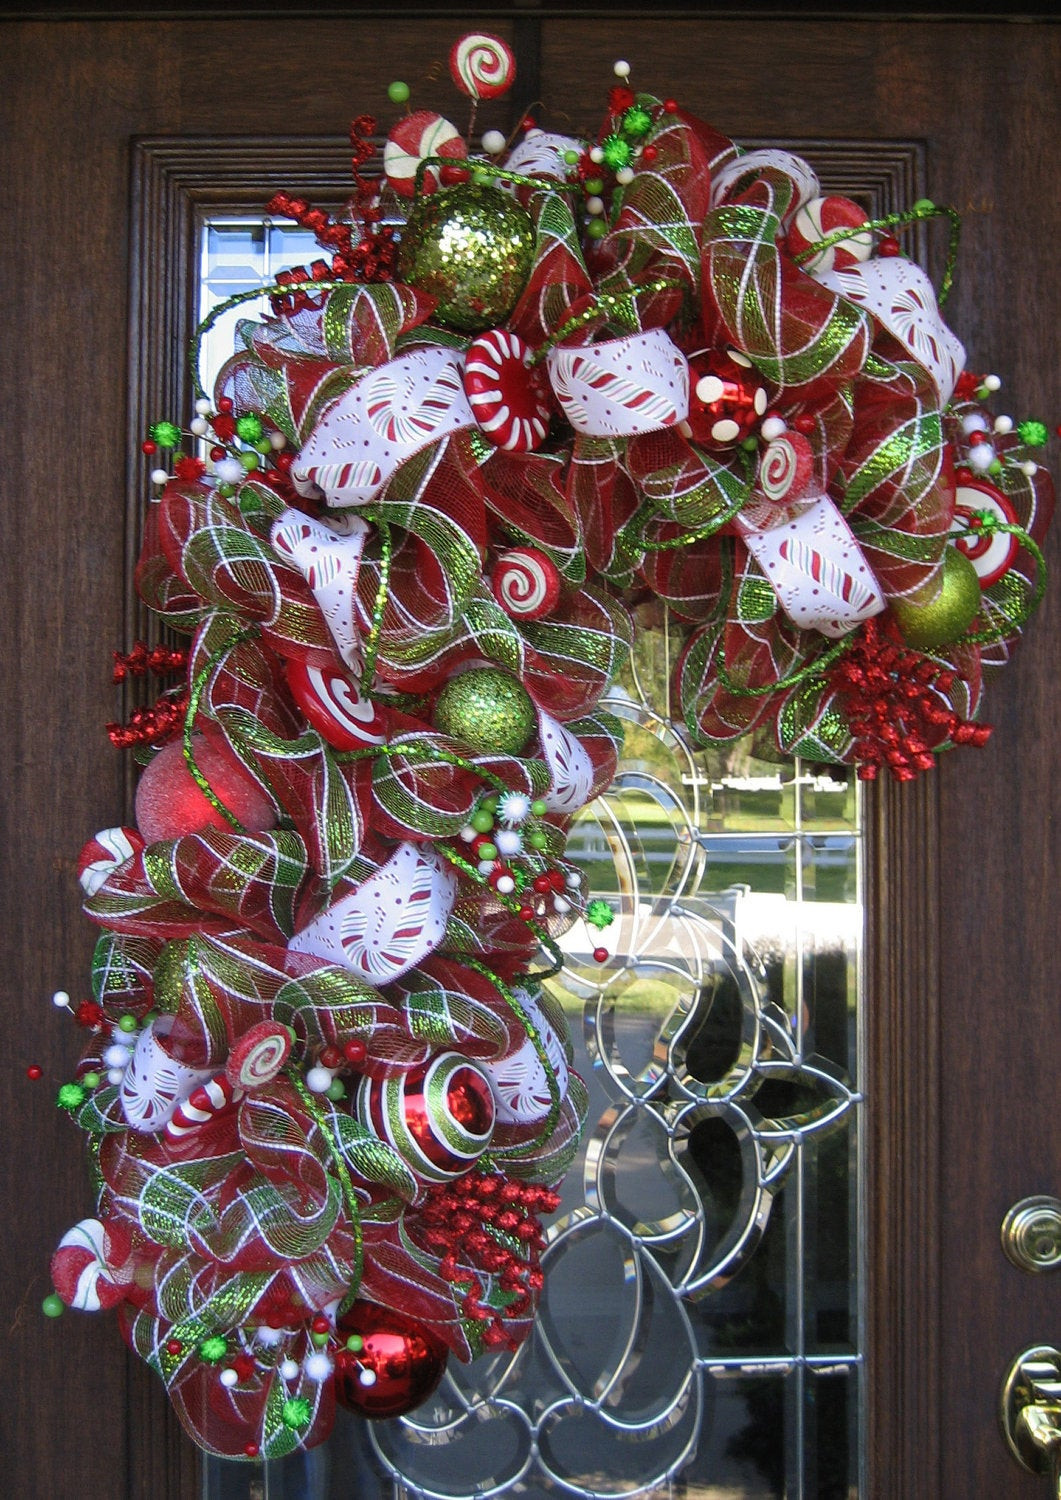 Candy Cane Christmas Wreath
 Deco Mesh PLAID CANDY CANE Wreath